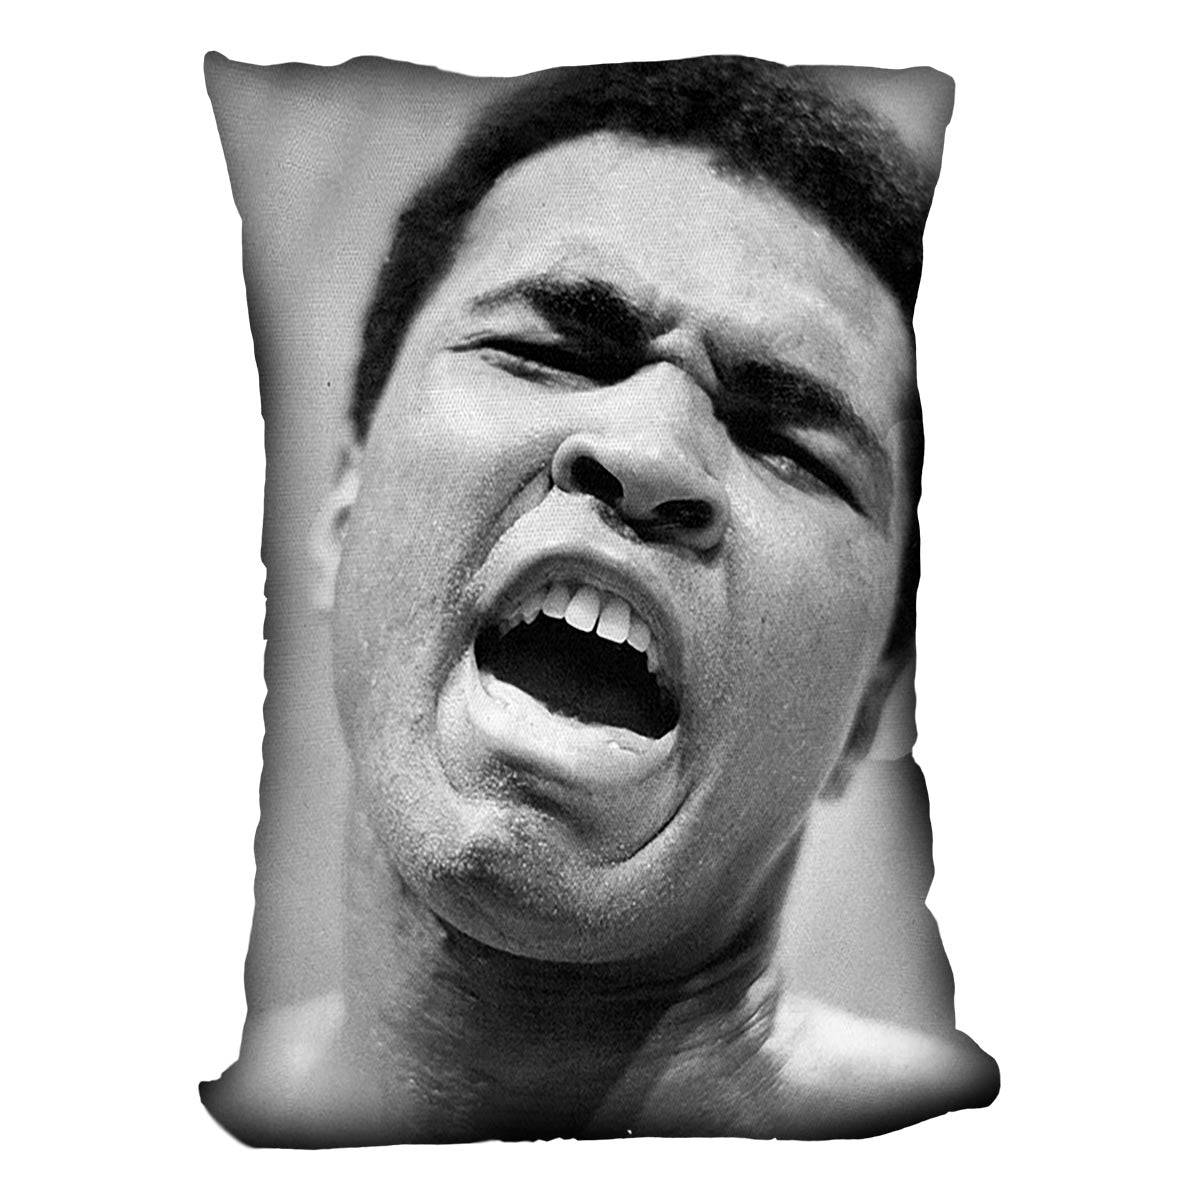 Muhammad Ali shouts Cushion